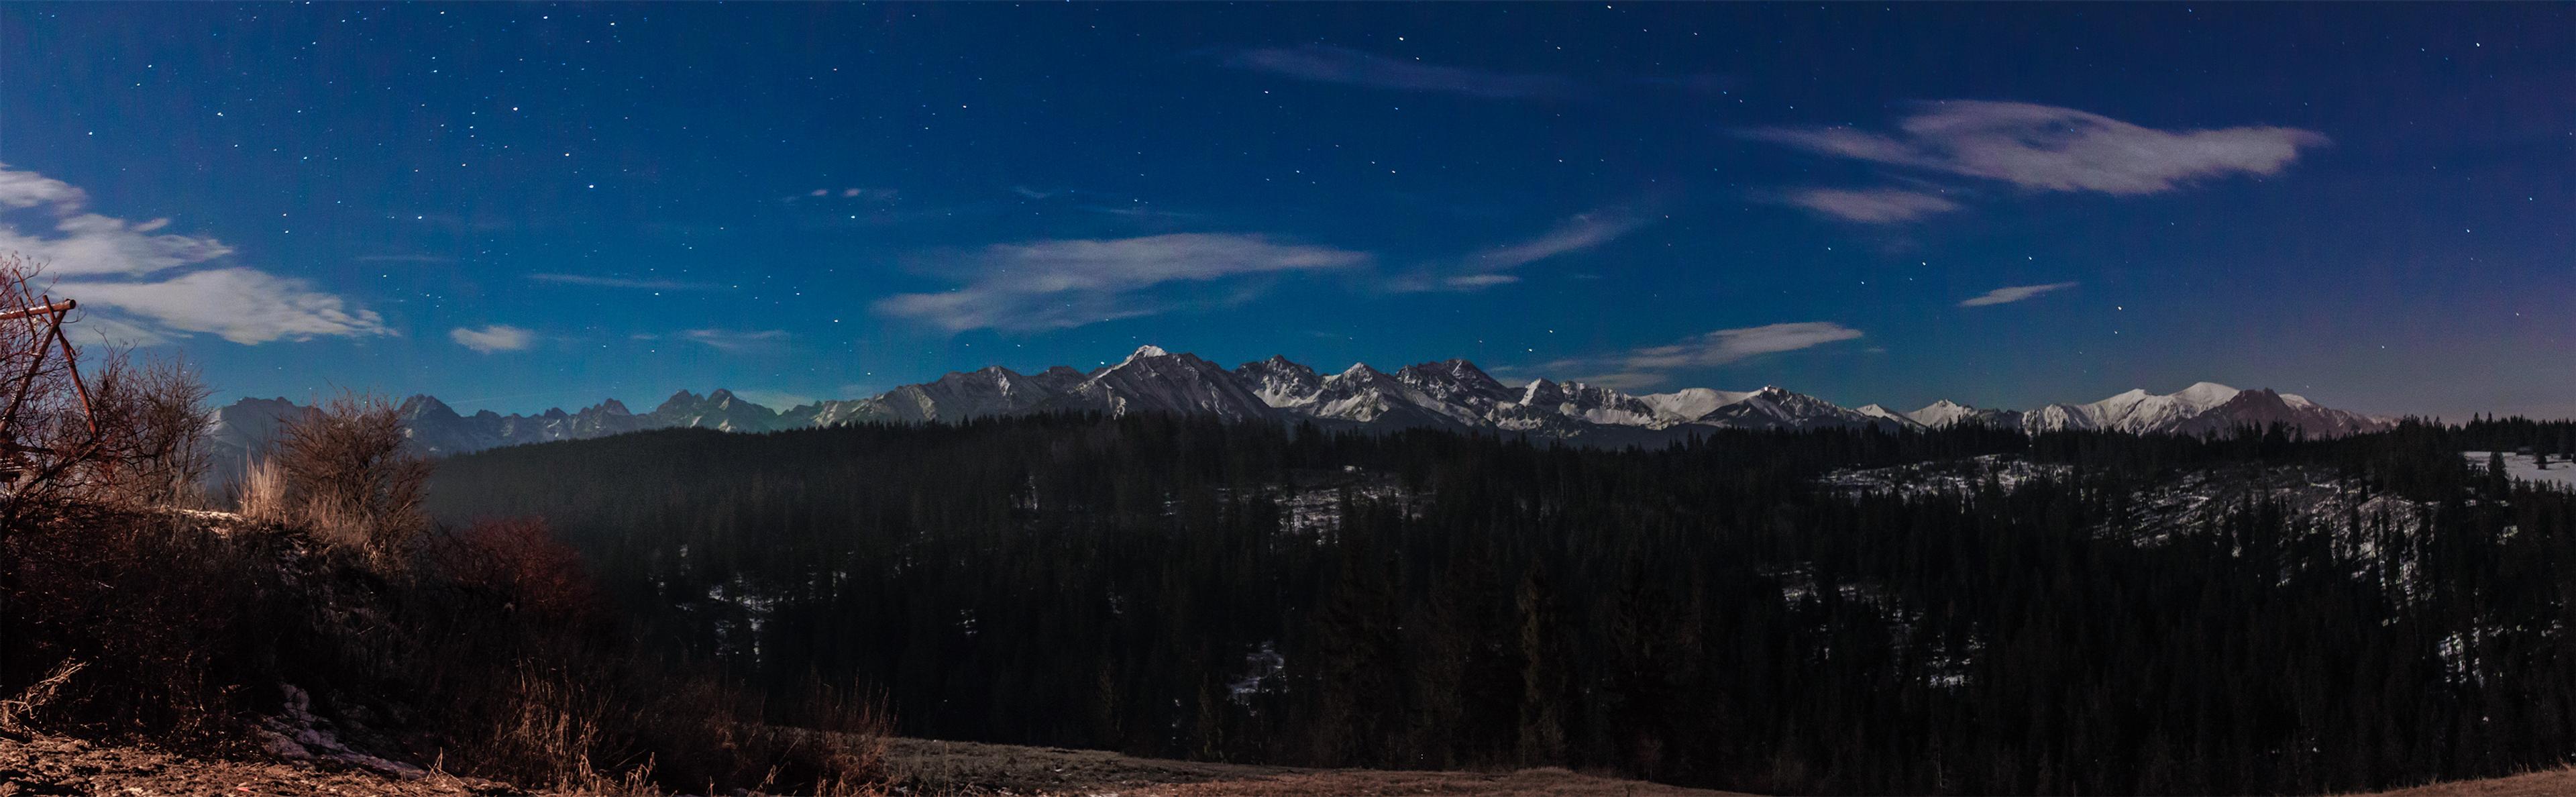 Night view of Tatra Mountains from Bukowina Tatrzanska